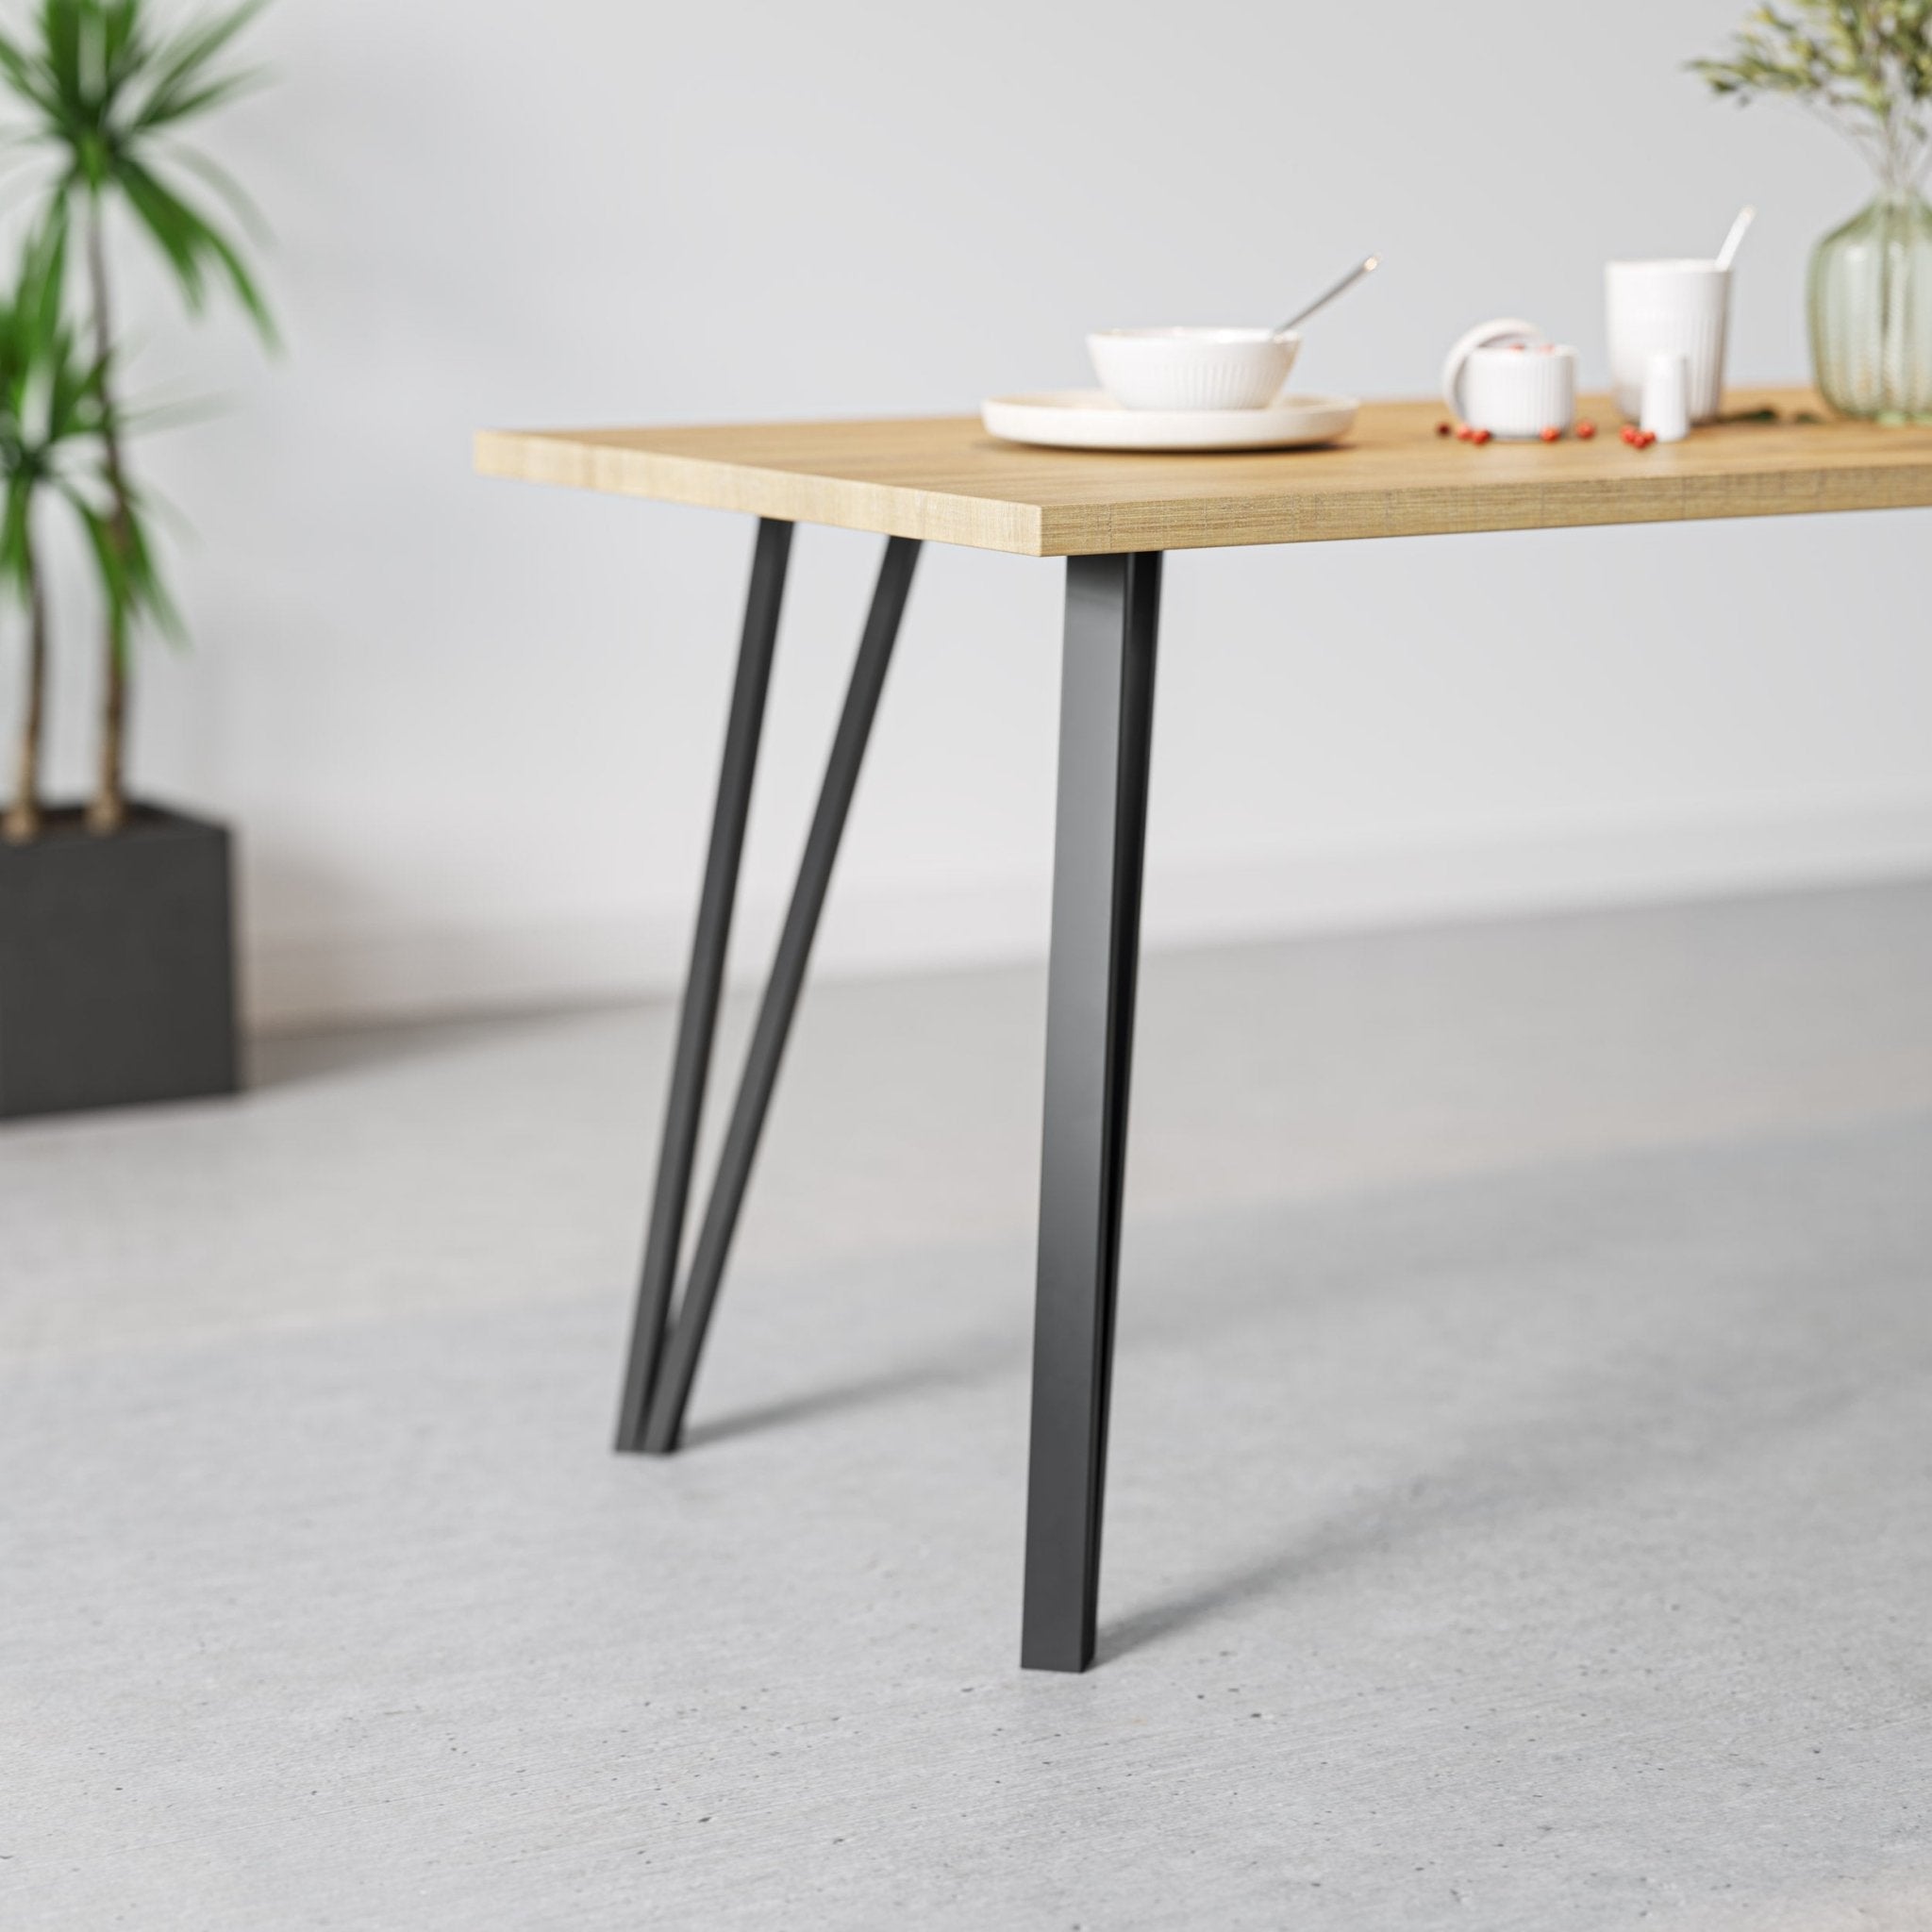 Box Hairpin Legs-Black-28" / 71cm - Desk & Dining Table-The Hairpin Leg Co.